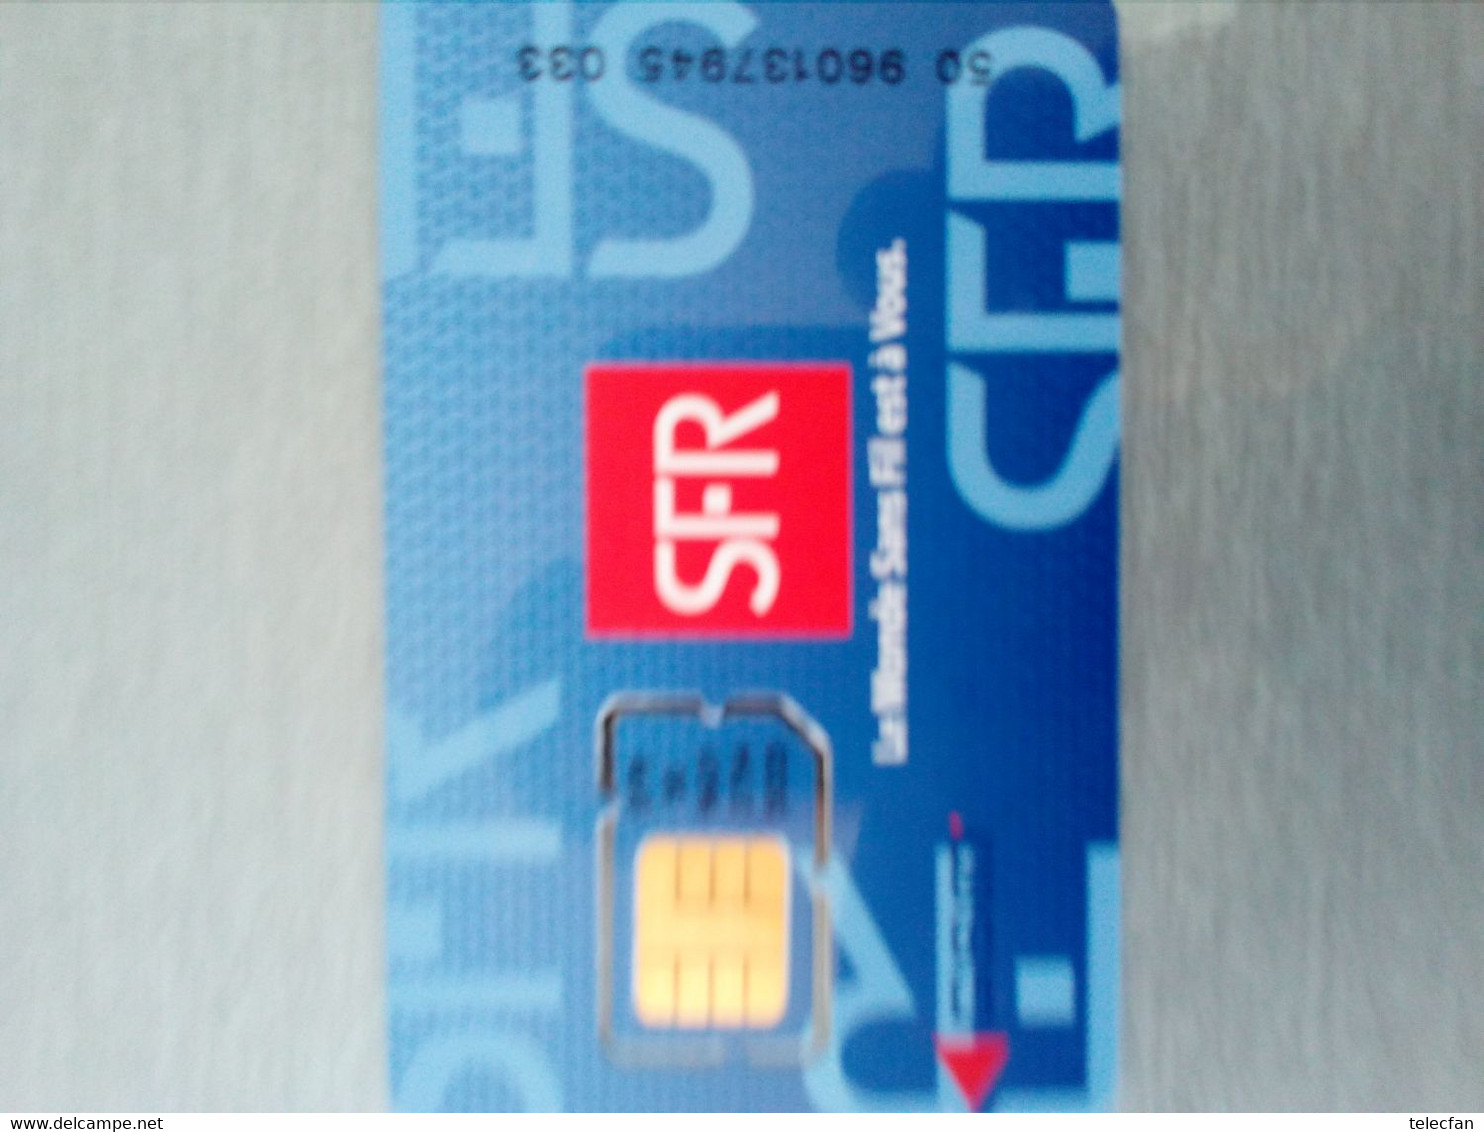 FRANCE GSM LIGNE SFR UT - Nachladekarten (Handy/SIM)